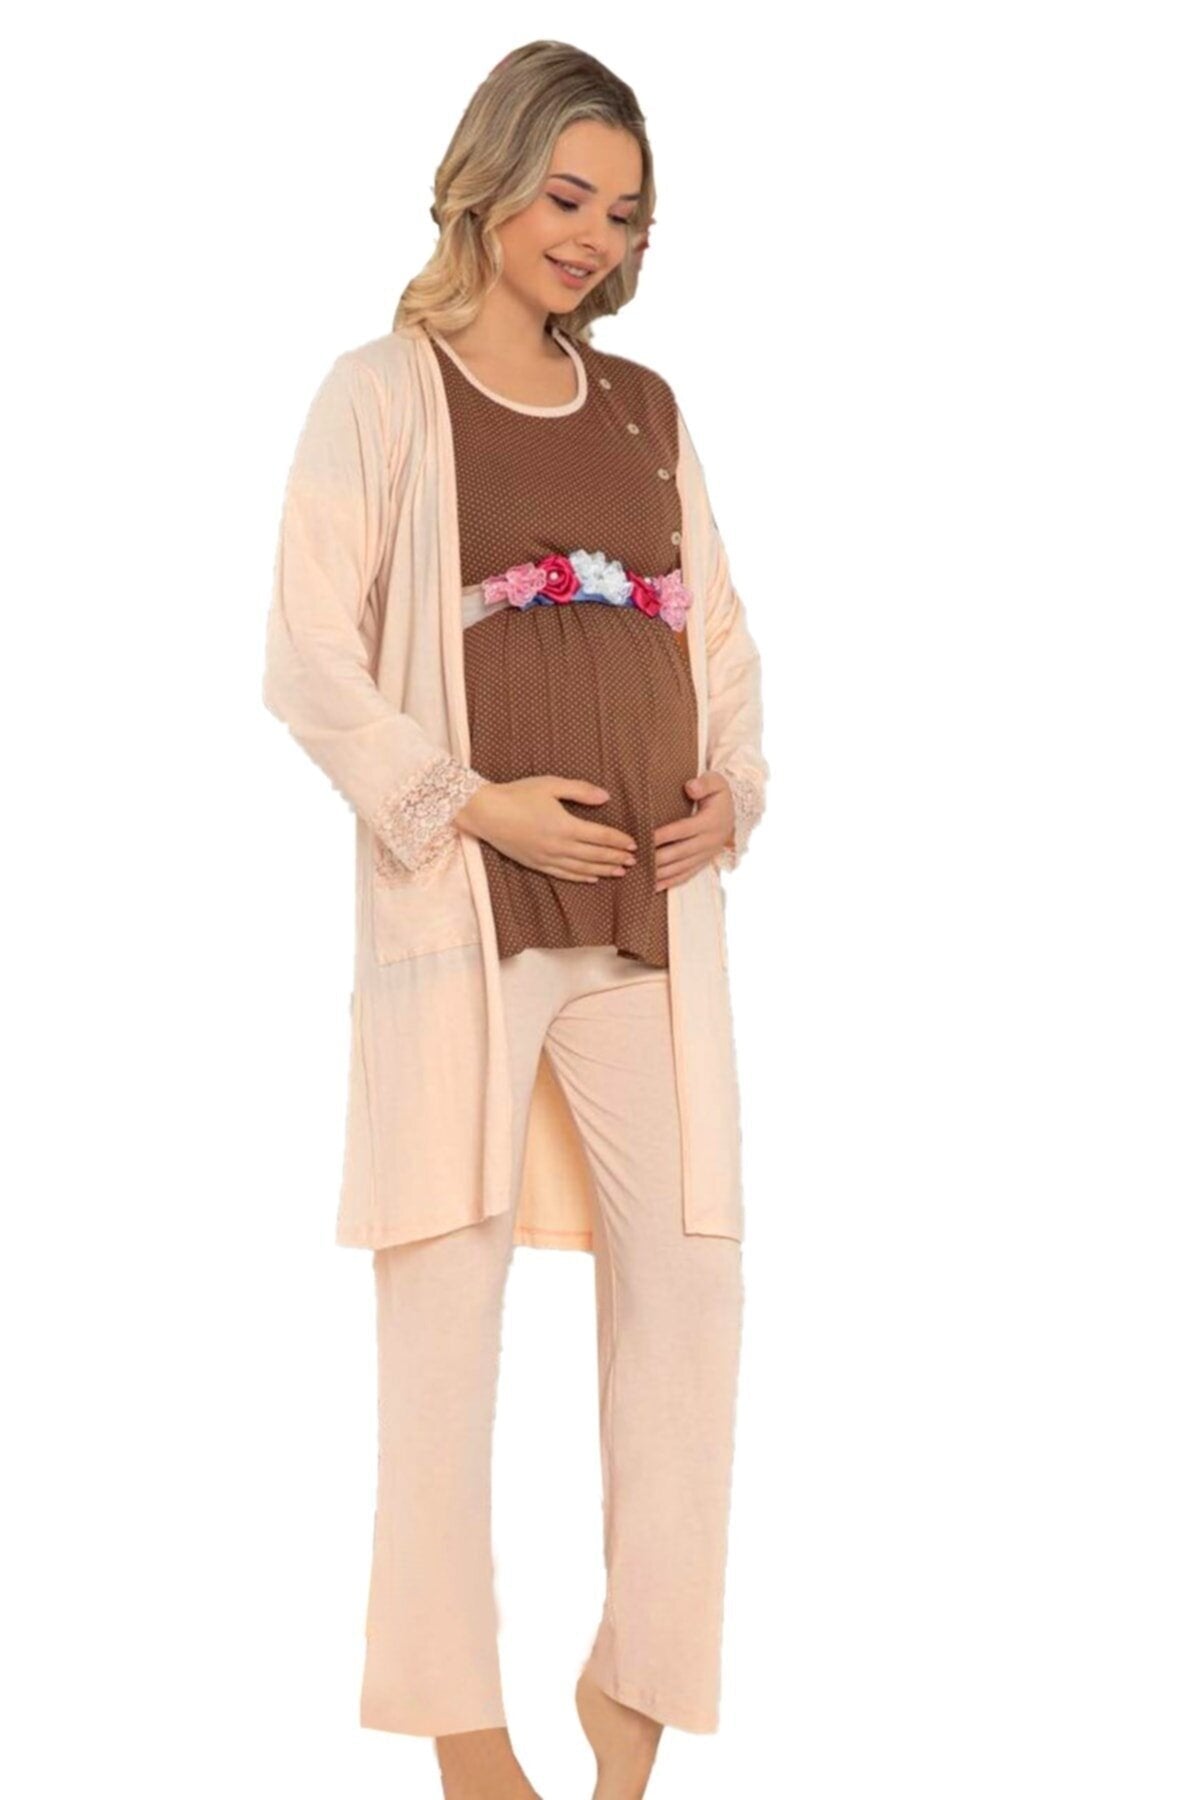 Shopymommy 49914 3-Pieces Maternity & Nursing Pajamas With Robe